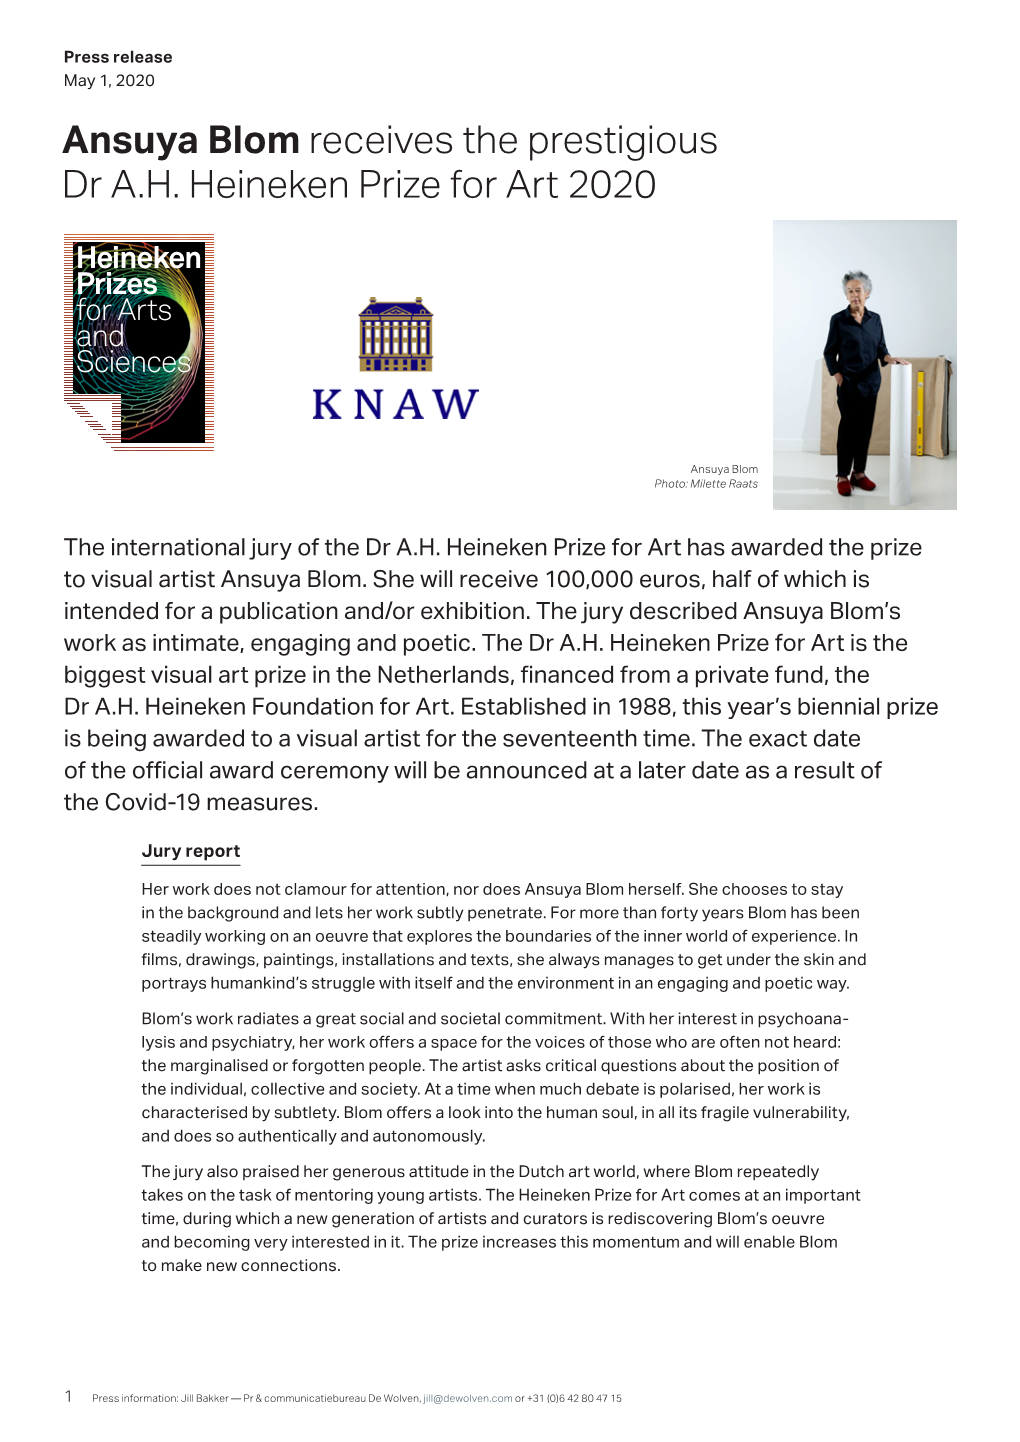 Ansuya Blom Receives the Prestigious Dr A.H. Heineken Prize for Art 2020